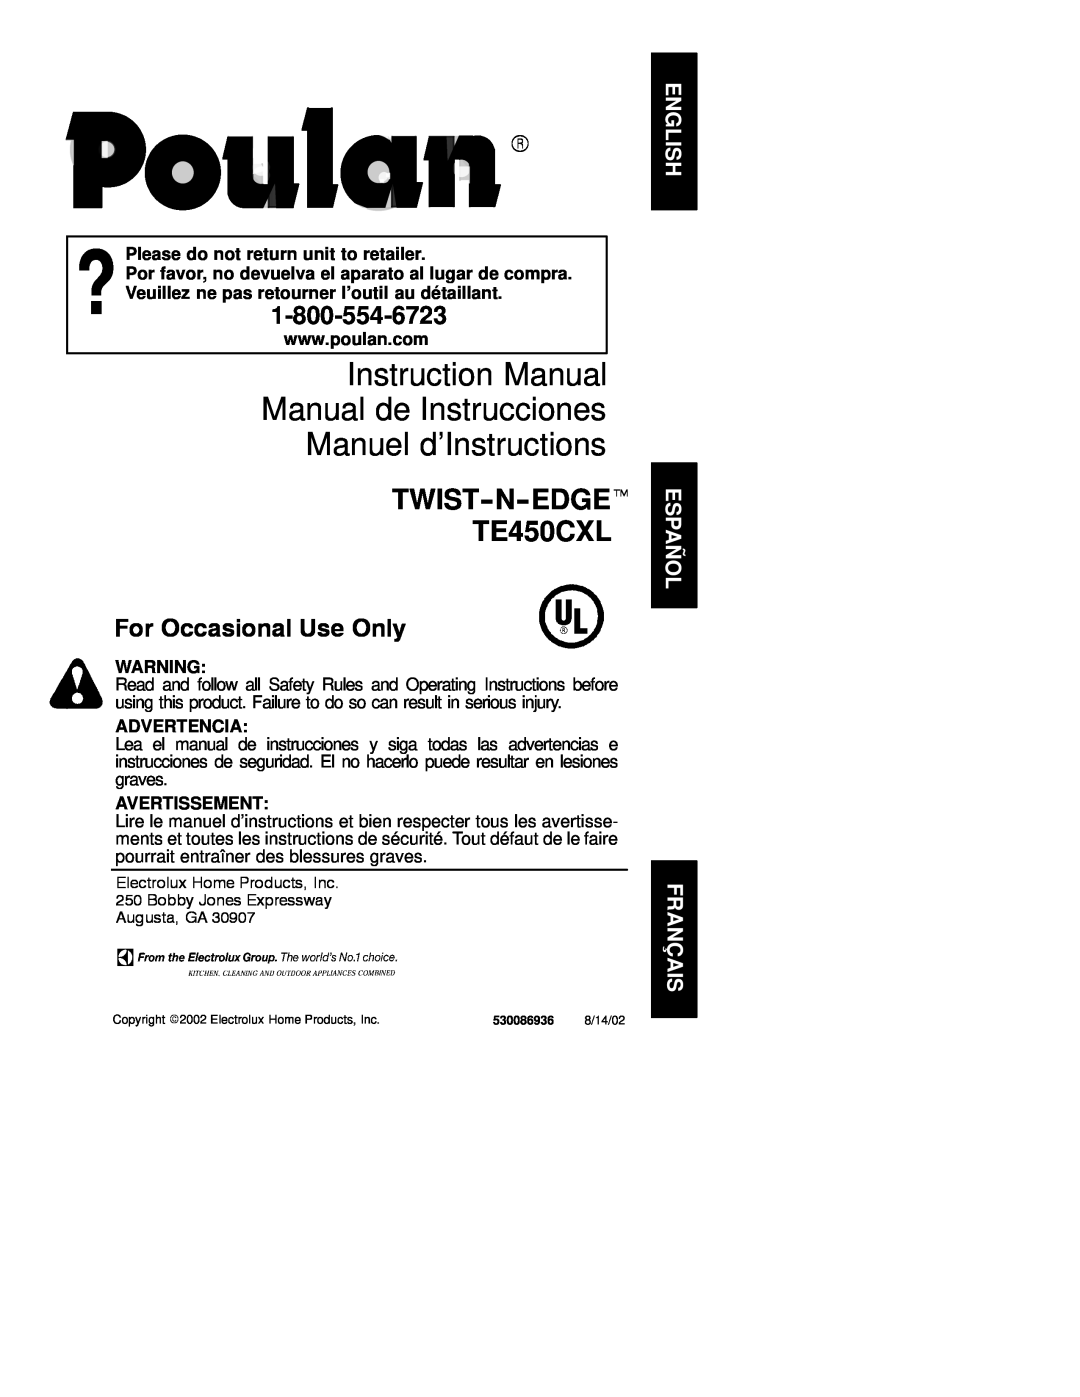 Poulan 530086936, EE450CXL instruction manual Please do not return unit to retailer, Advertencia, Avertissement 